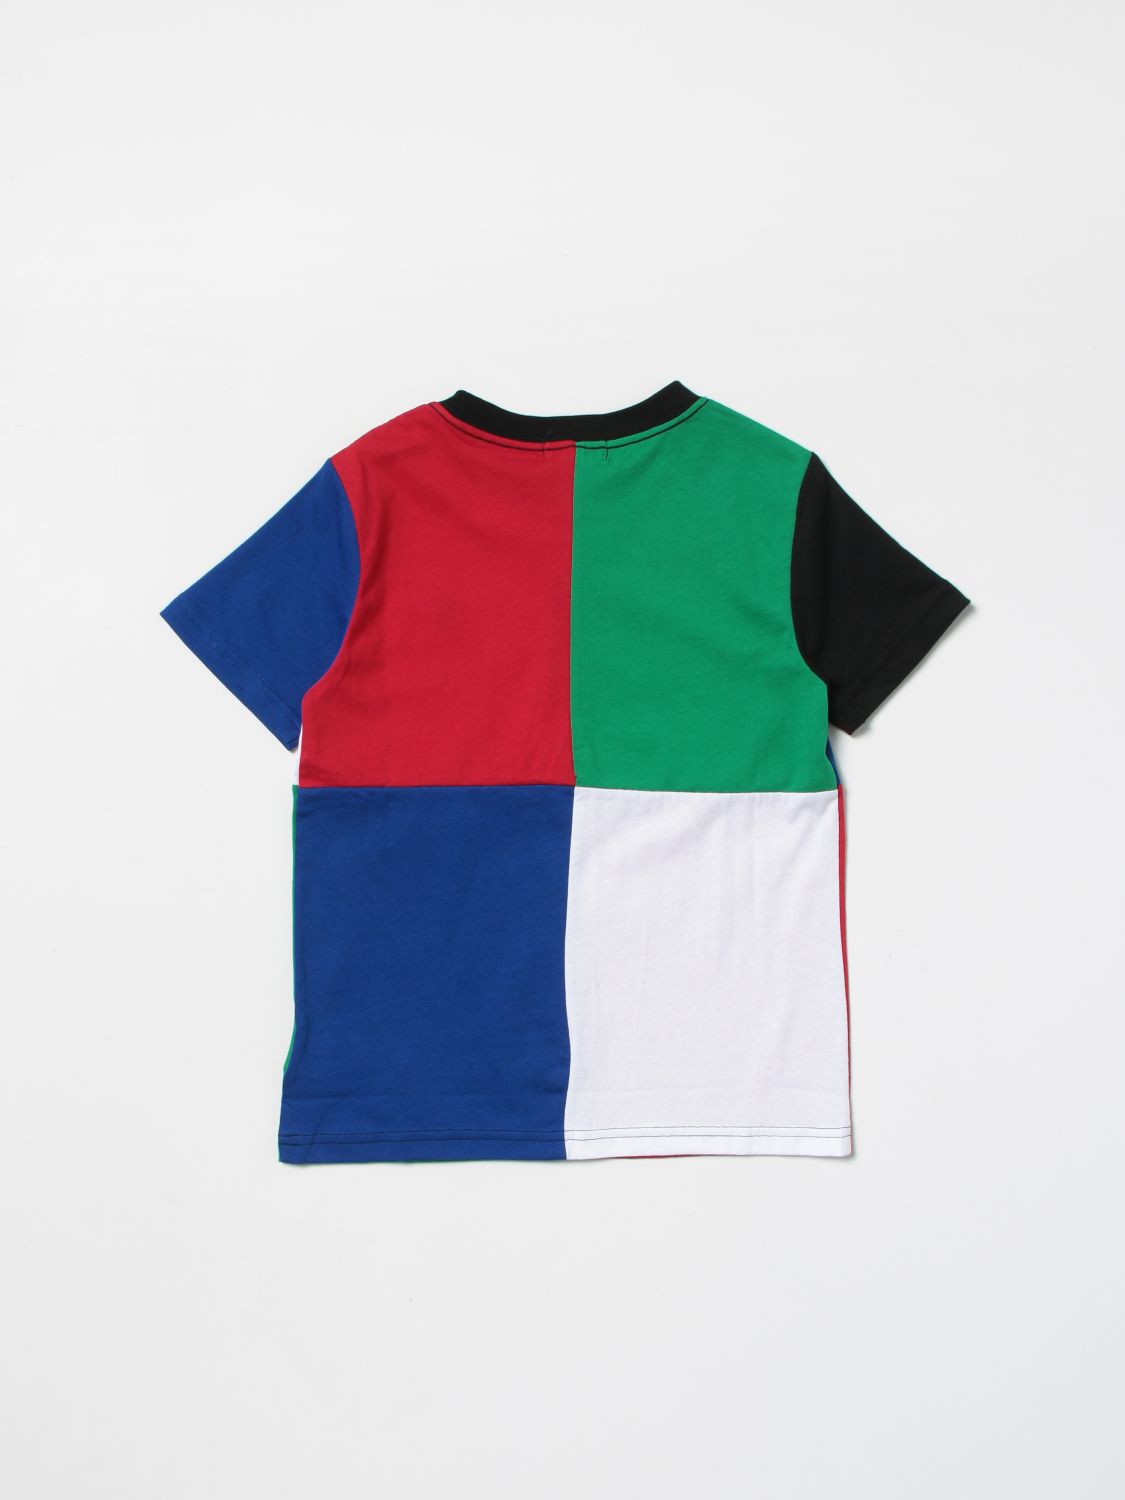 Polo Bambino colore Giglio.com Bambino Abbigliamento Top e t-shirt T-shirt Polo 